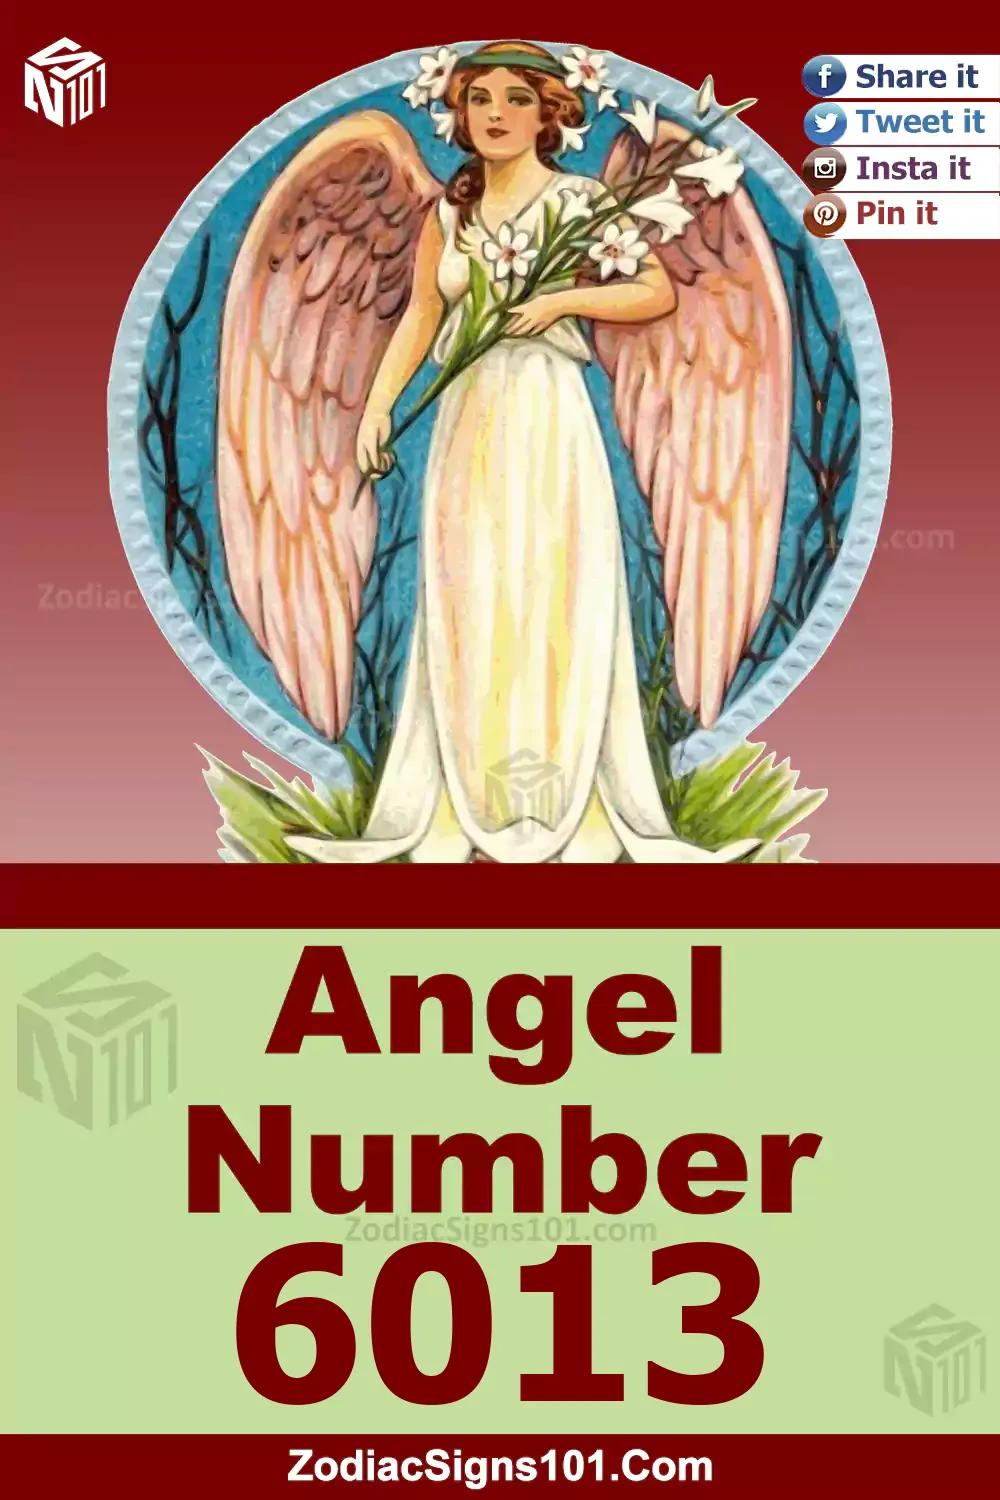 6013-Angel-Number-Meaning.jpg